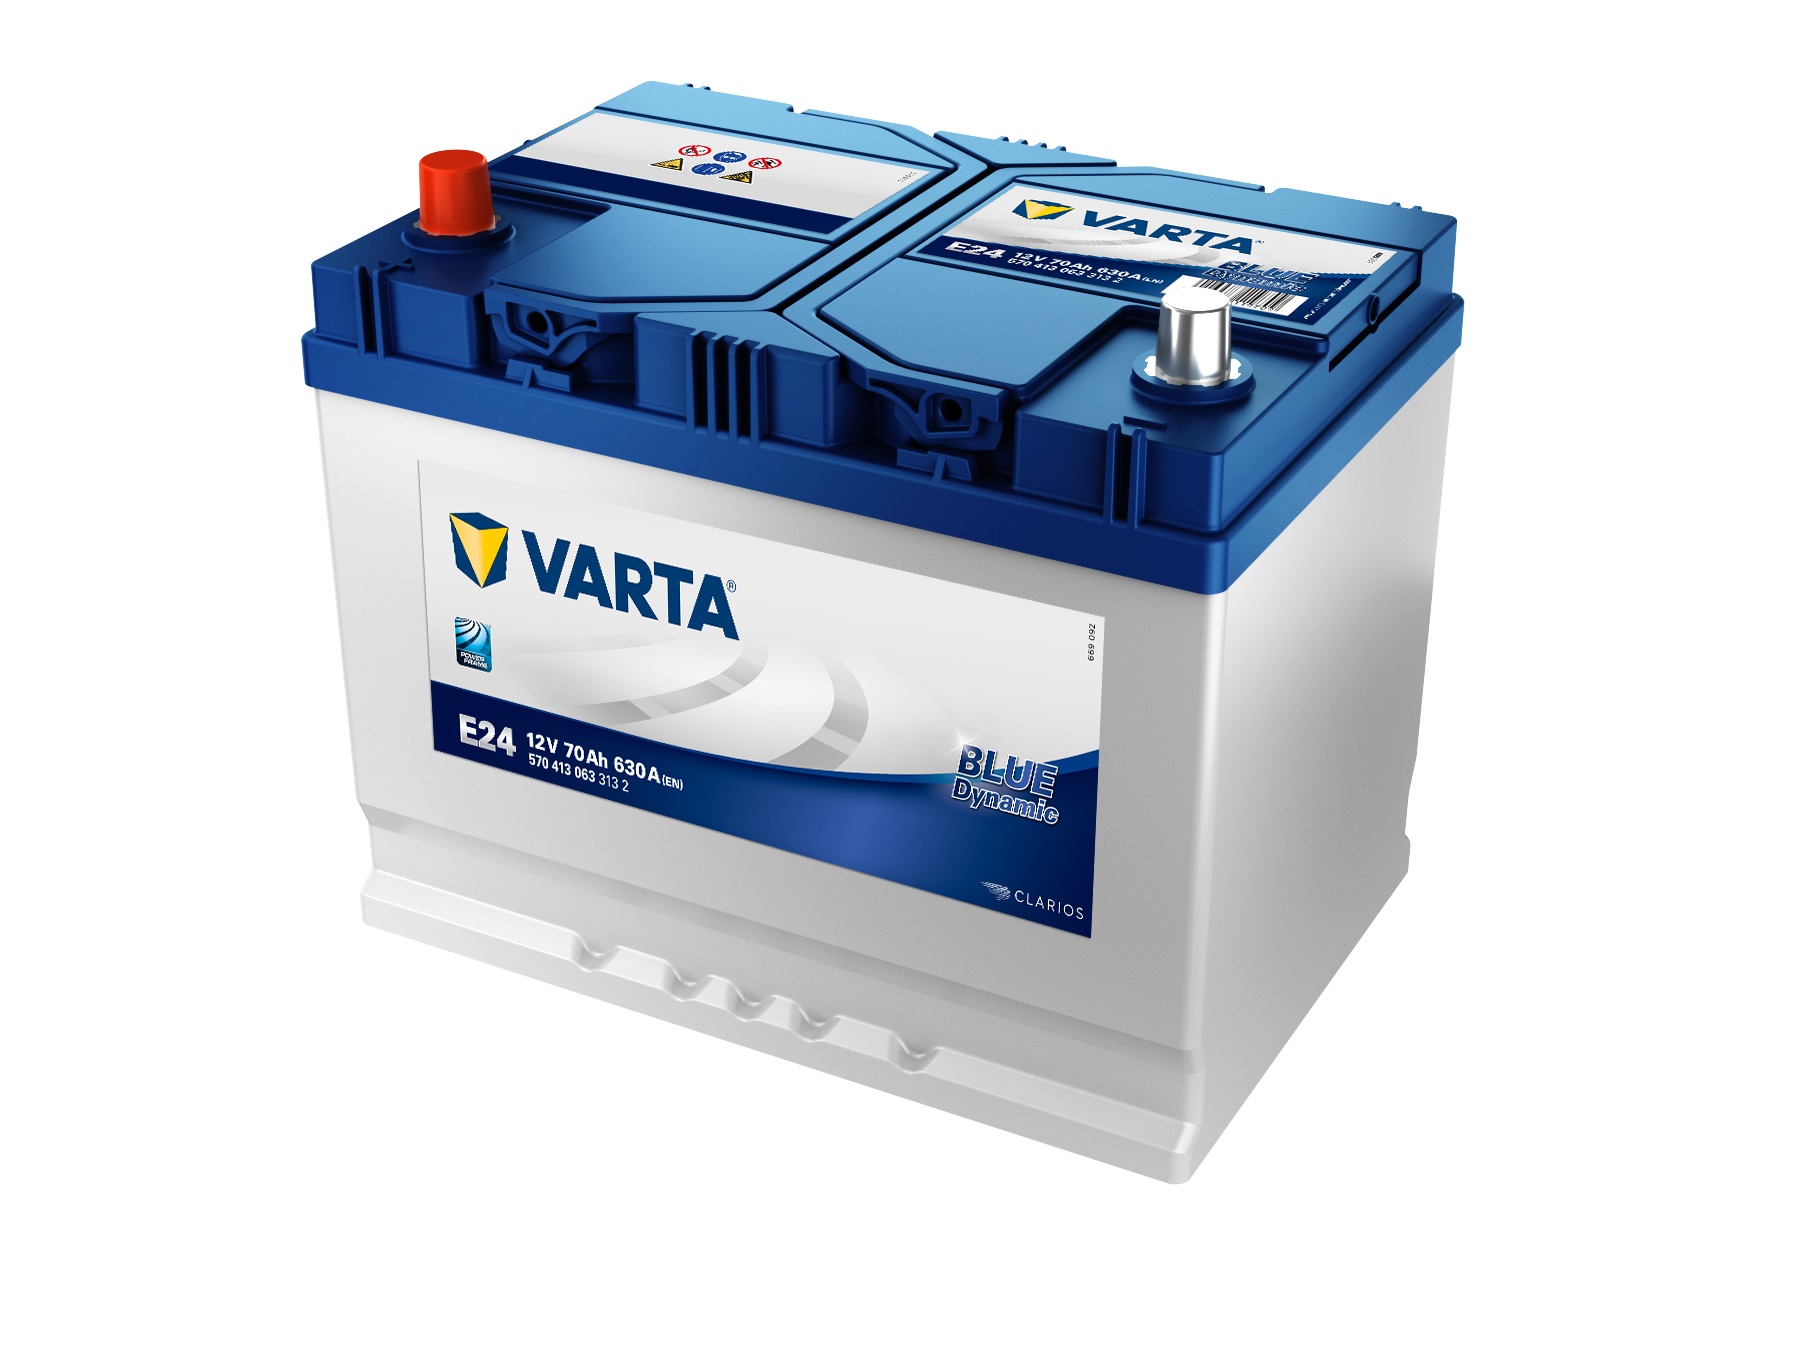 VARTA Blue Dynamic Autobatterie, E24, 5704130633, 70 Ah, 630 A von Varta